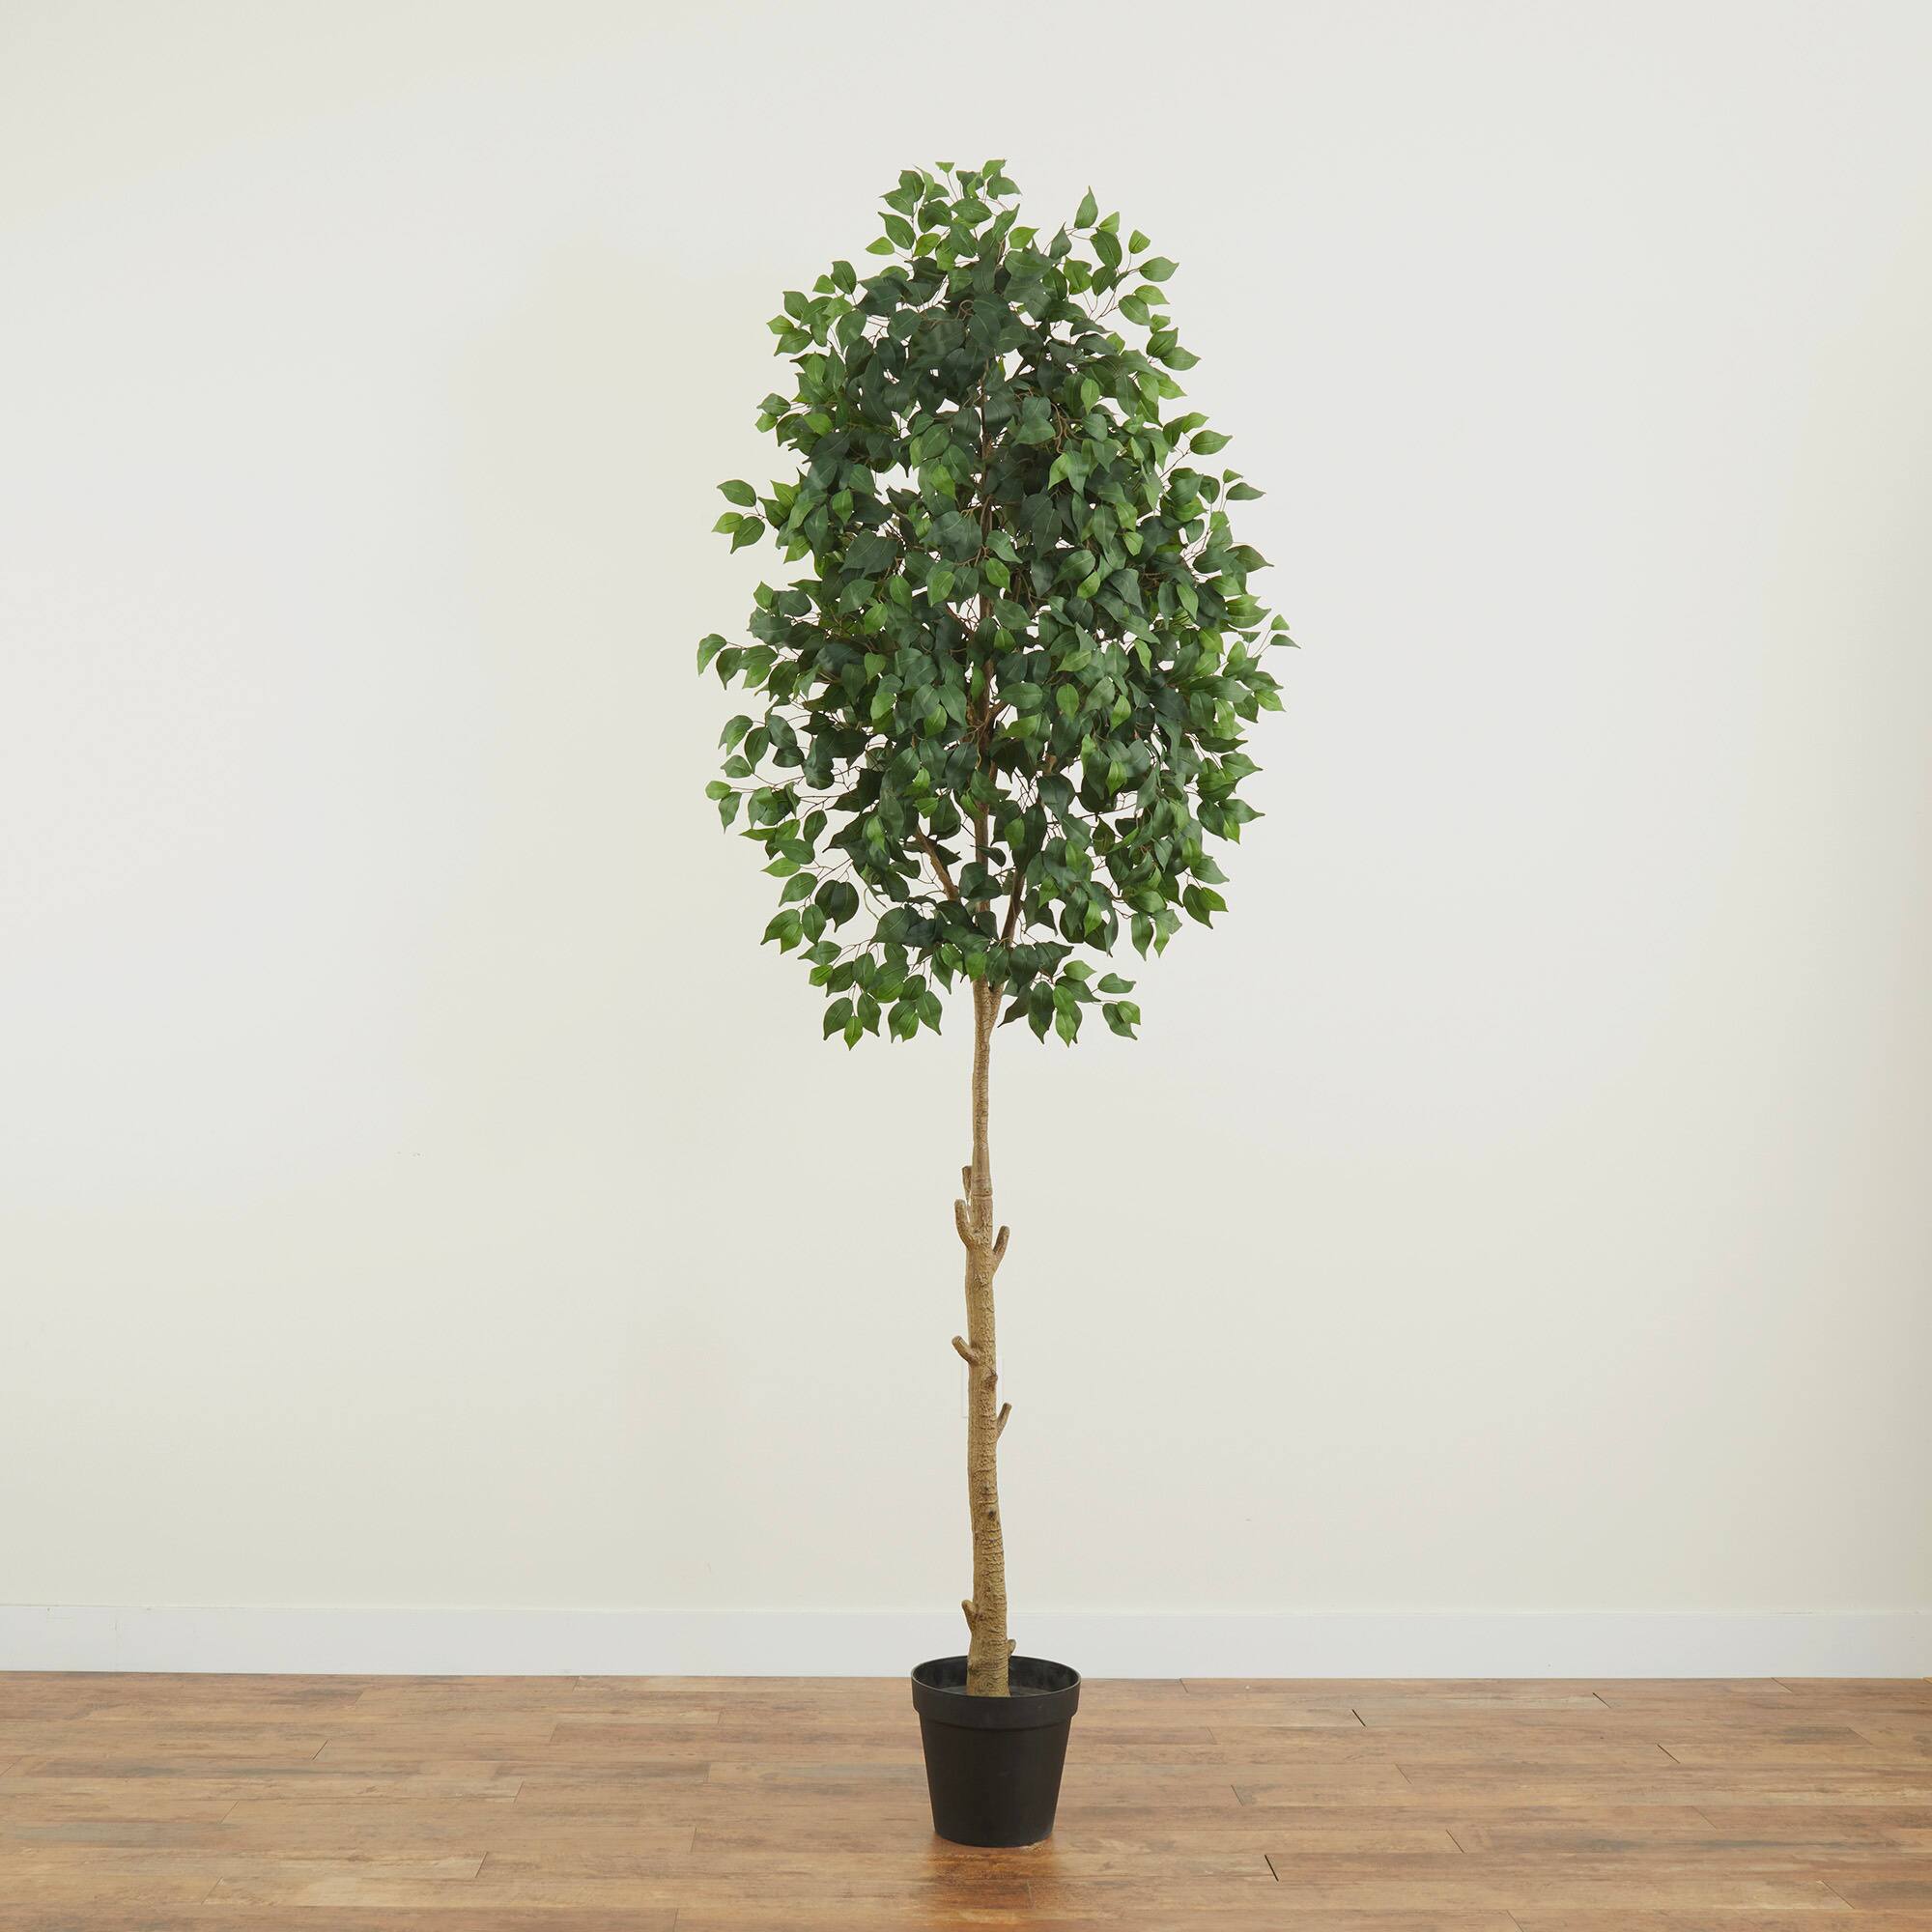 9ft. Artificial Ficus Tree